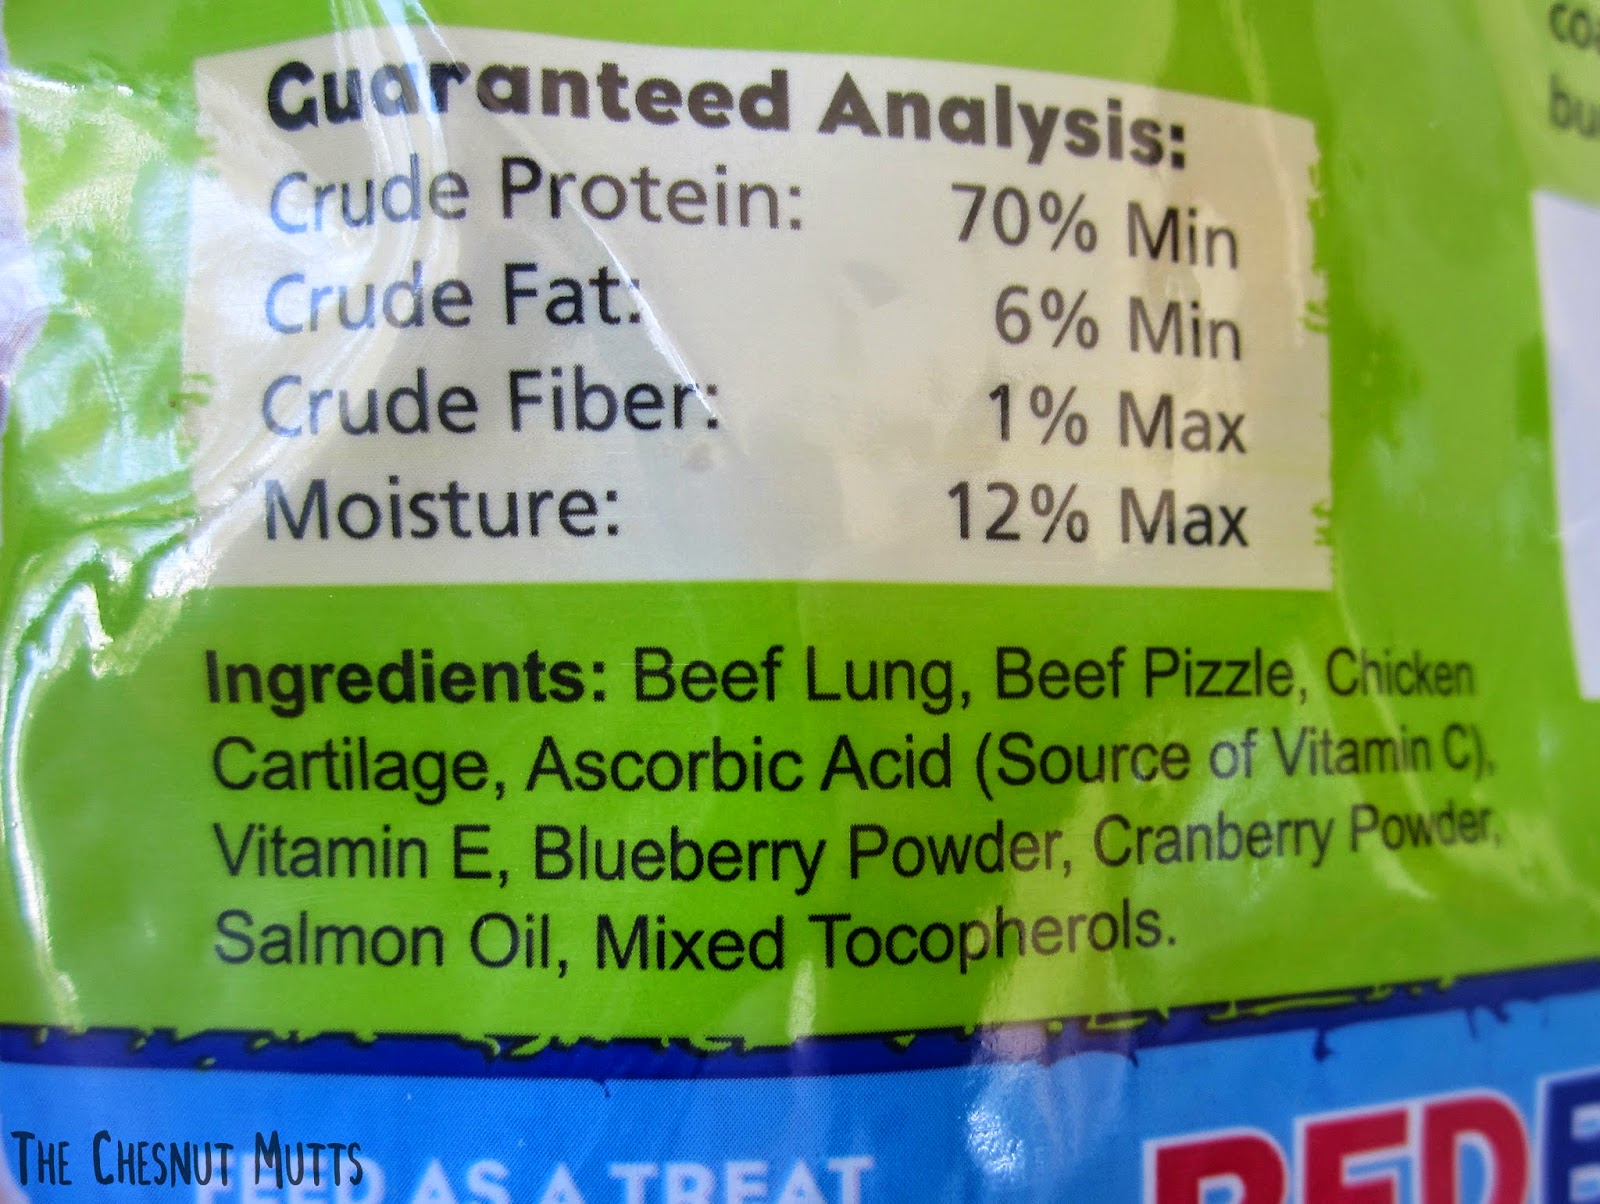 Ingredients: Beef Lung, Beef Pizzle, Chicken Cartilage, Ascorbic Acid....